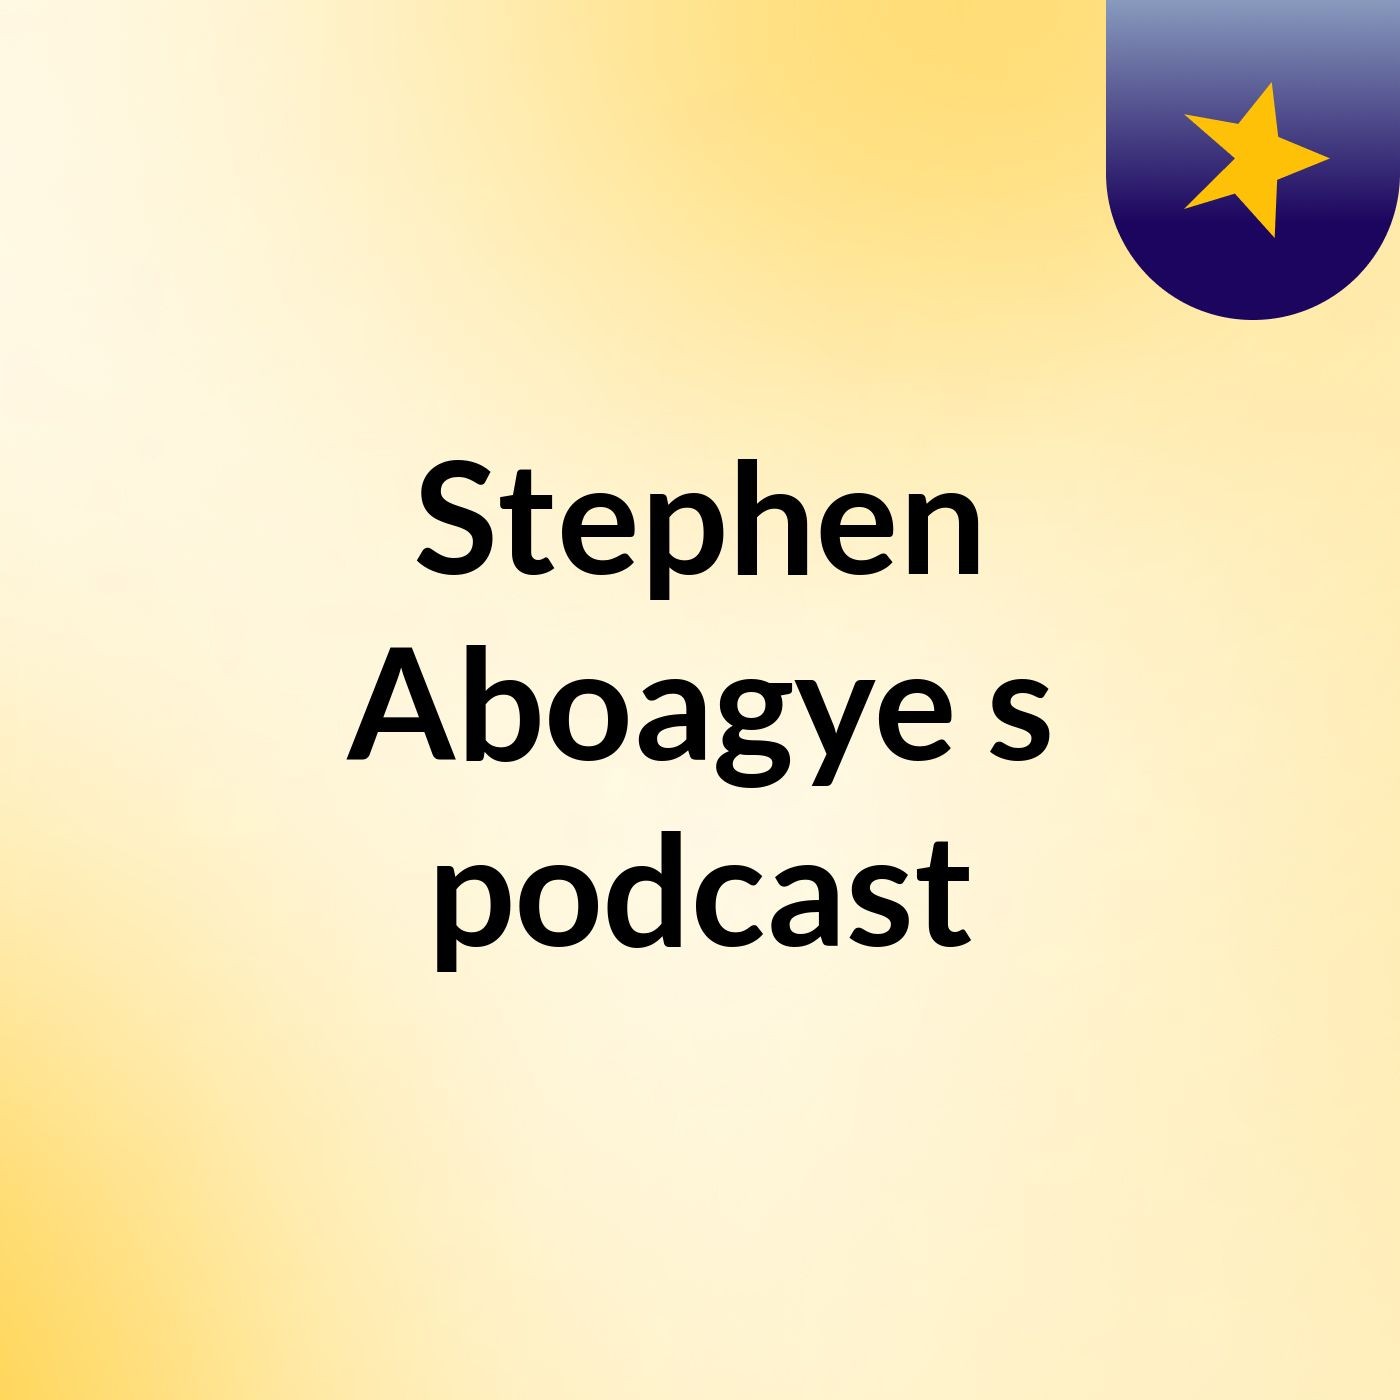 Episode 2 - Stephen Aboagye's podcast